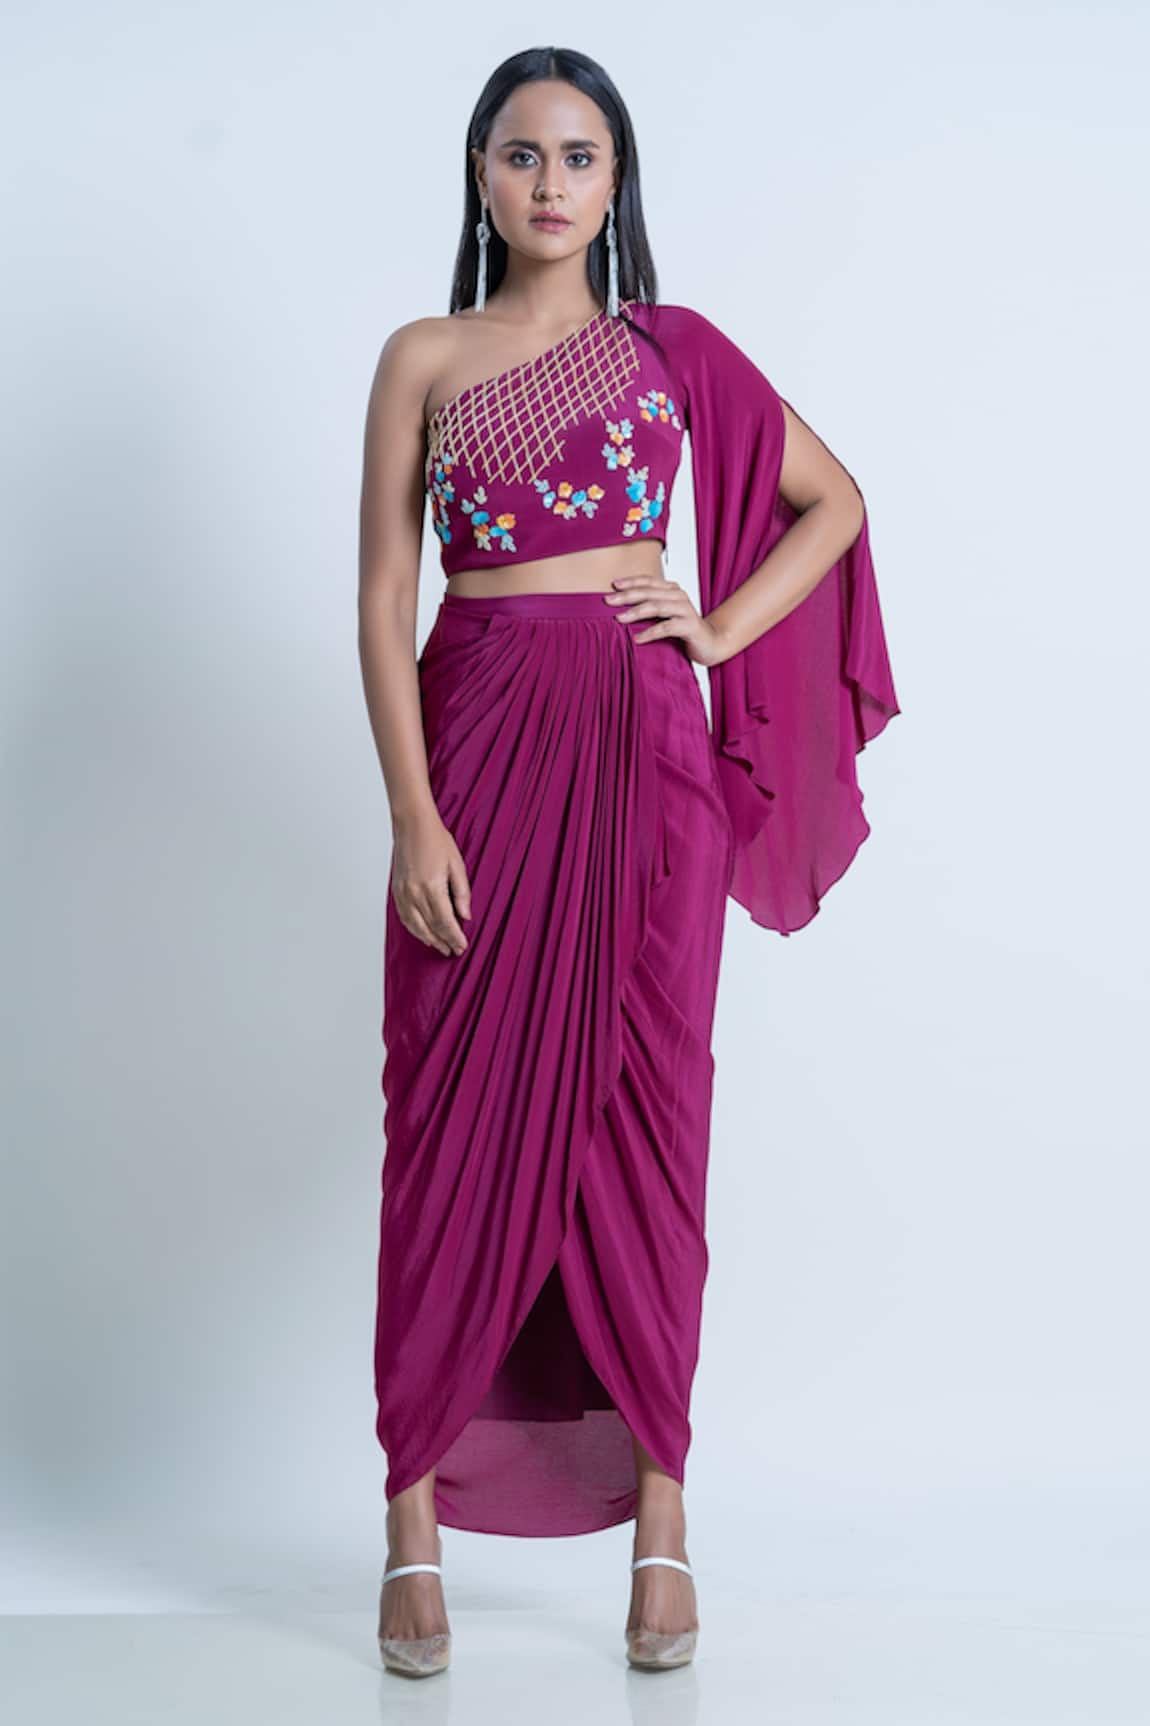 Nautanky Sequin & Beads Embellished Crop Top & Drape Skirt Set